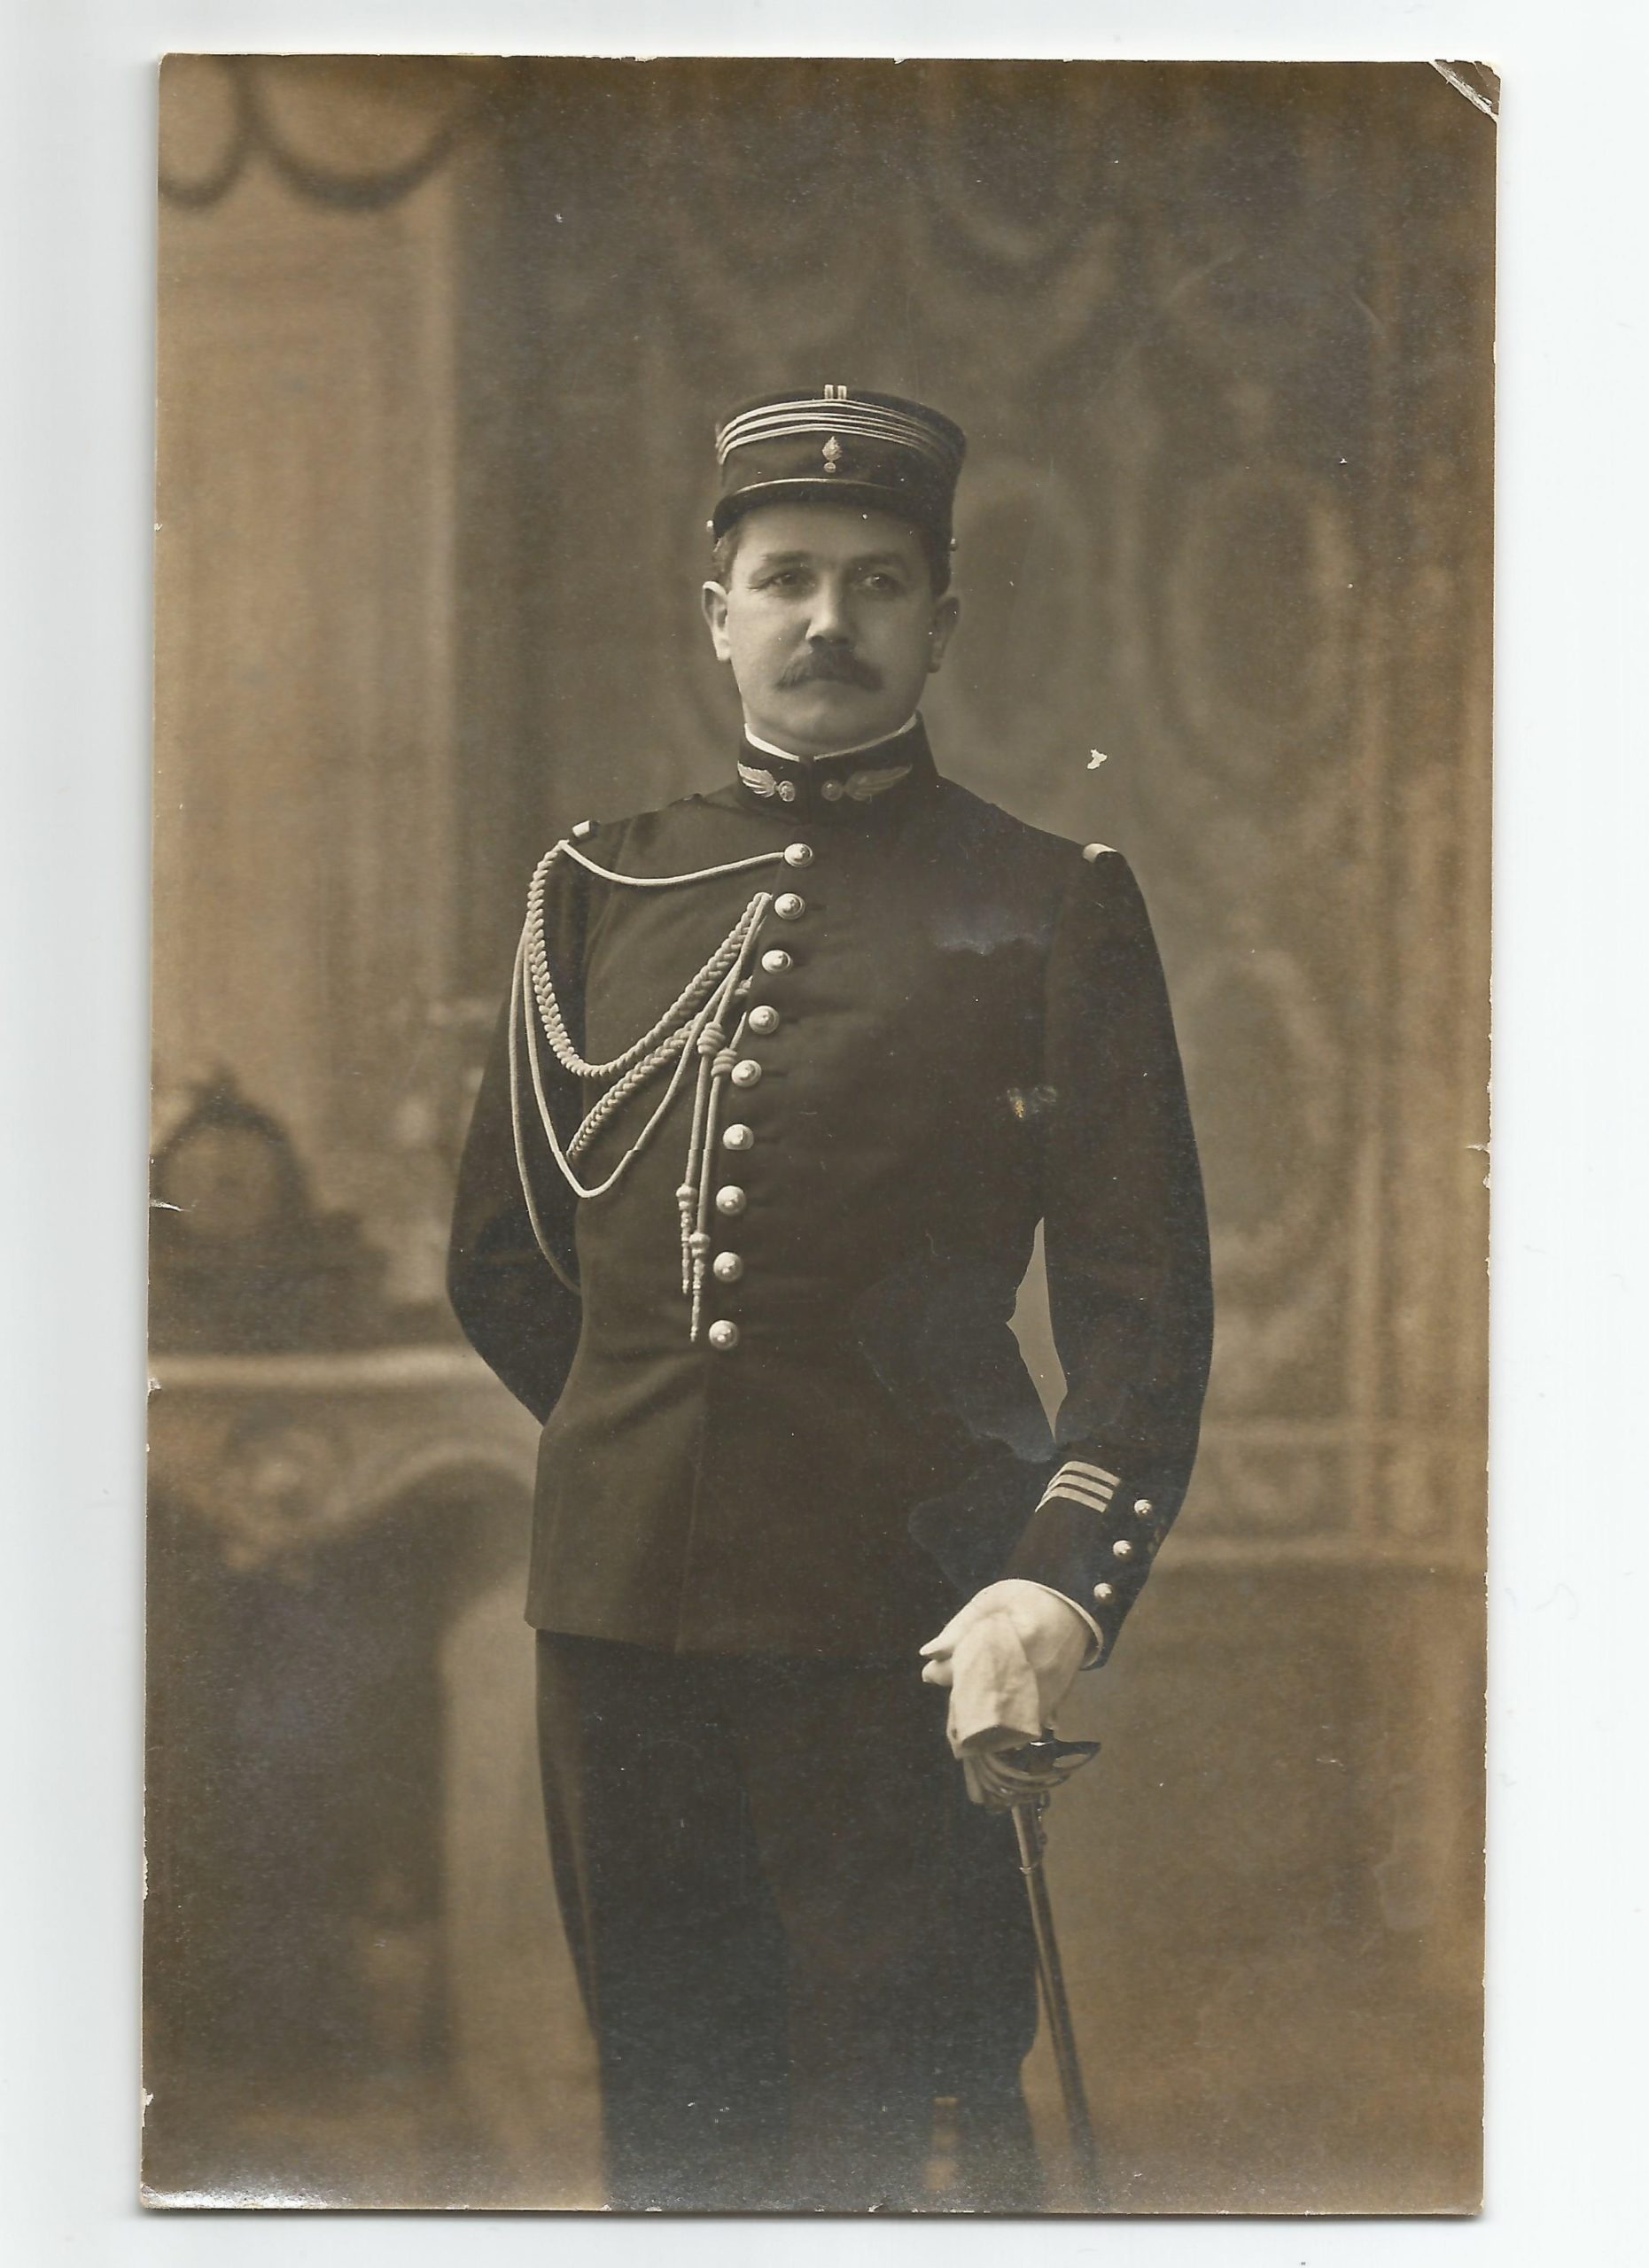 Ulysse Joyeux in Infanterieuniform zu Beginn des 20. Jahrhunderts.